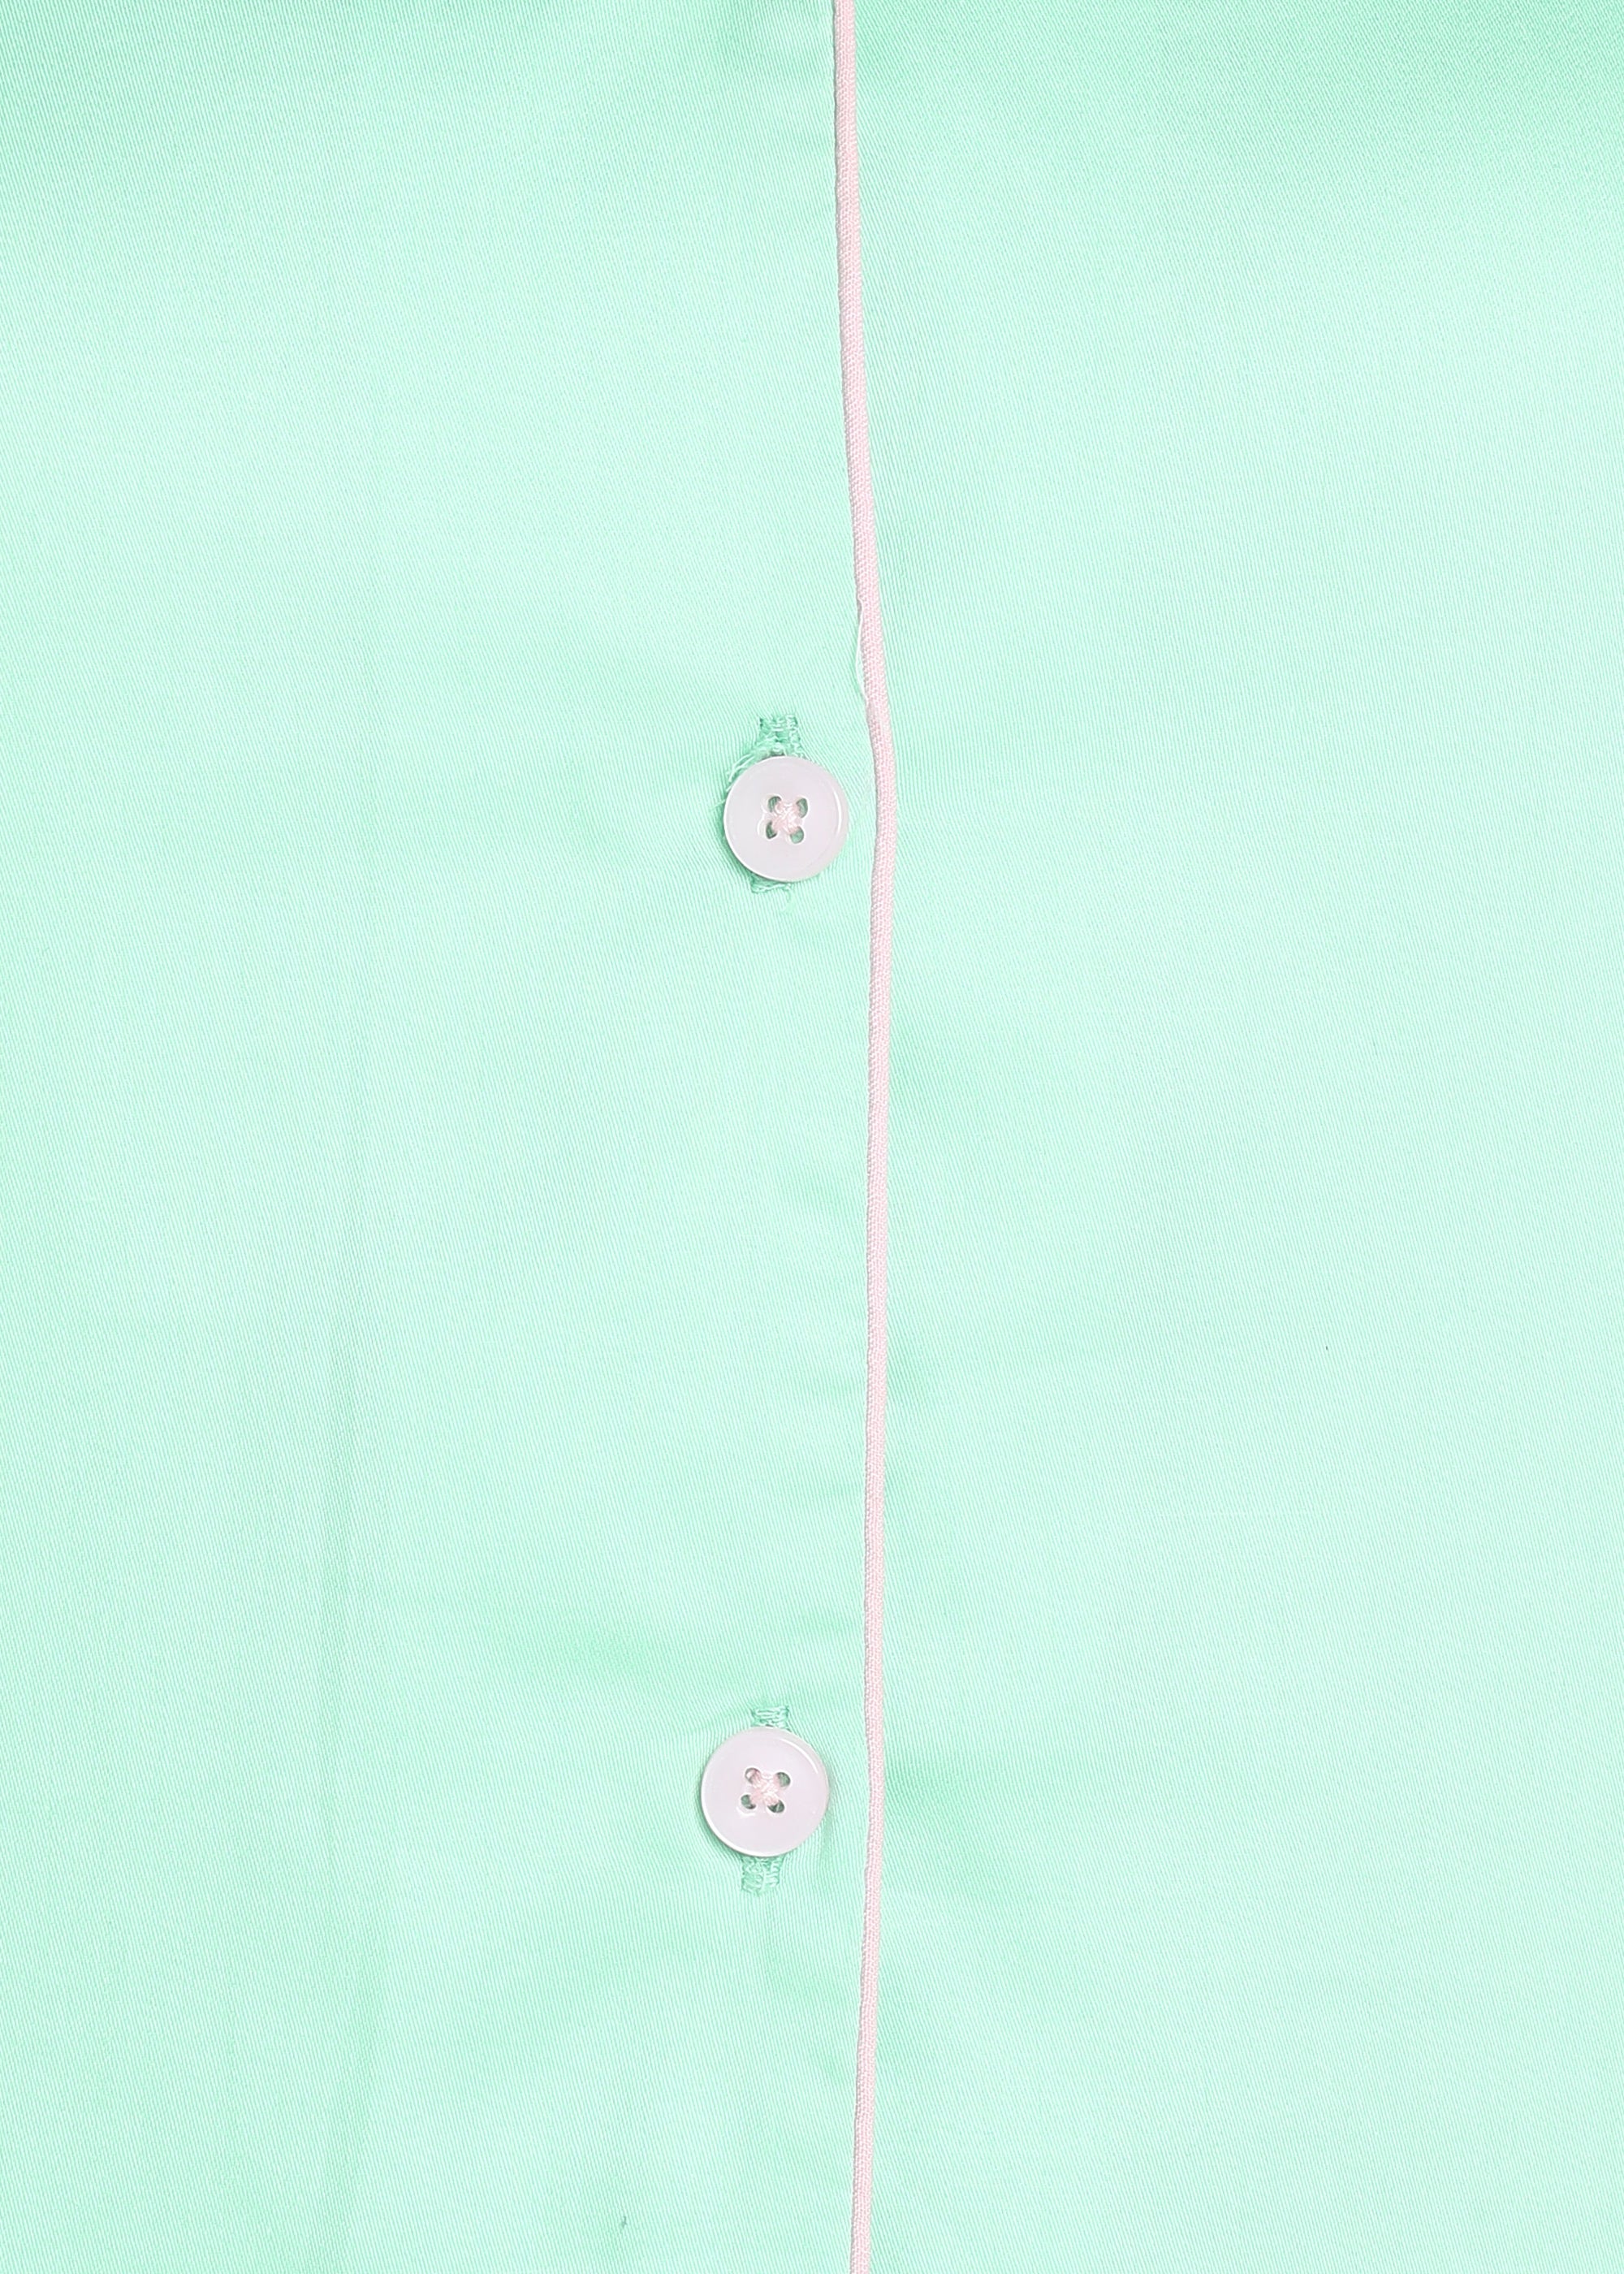 Seafoam Green Cotton Sateen Short Sleeve Women's Night Suit - Shopbloom